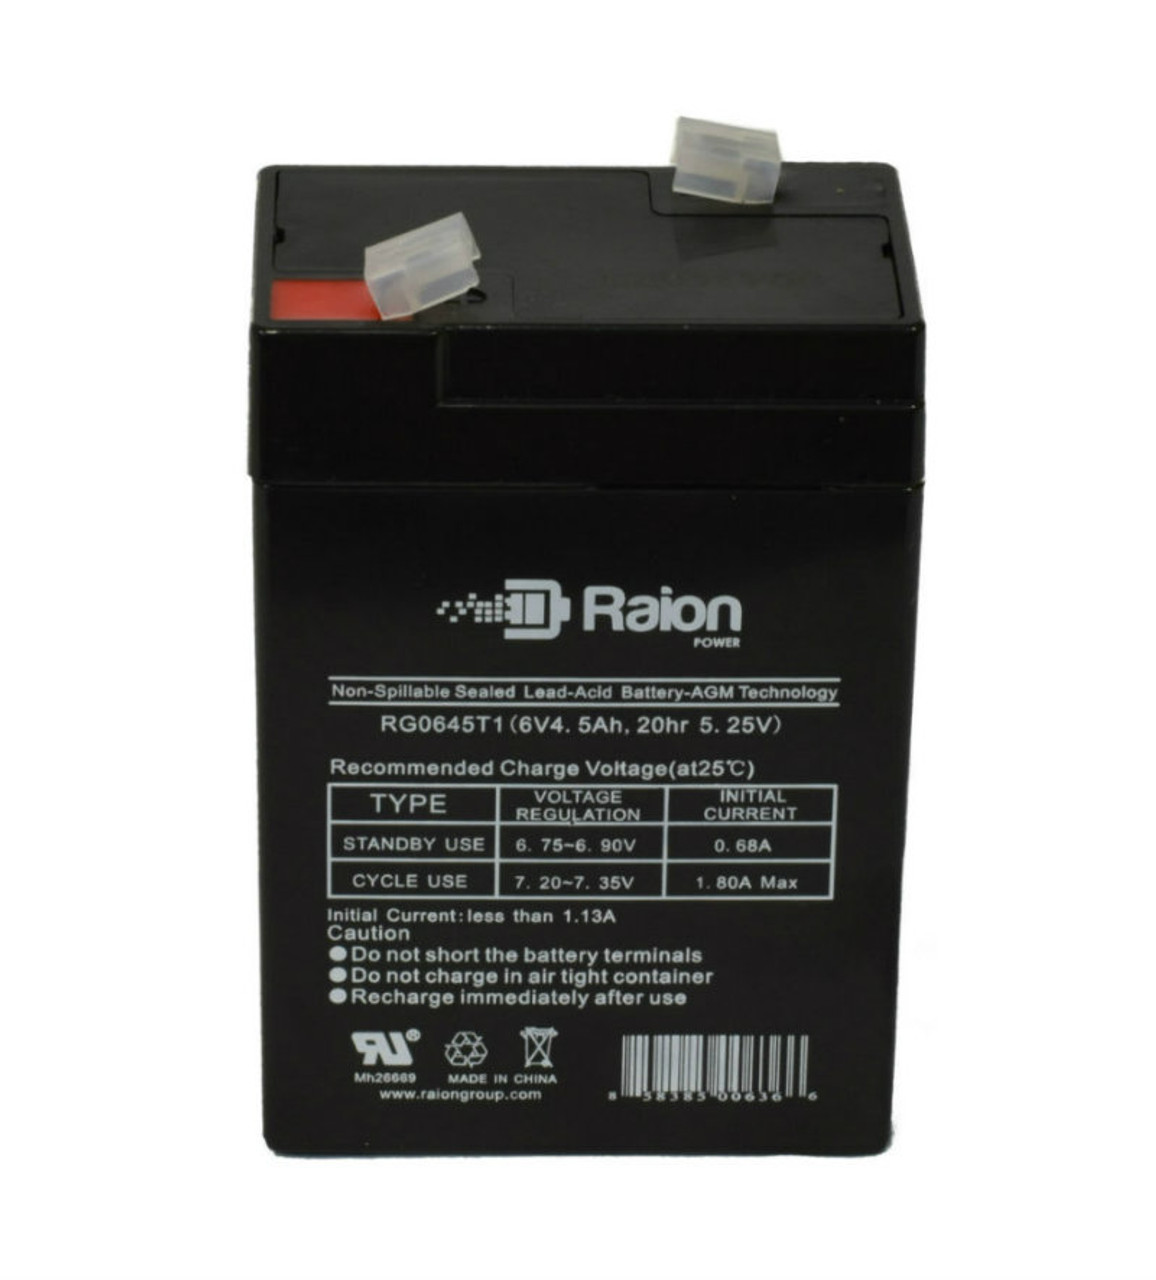 Raion Power RG0645T1 Replacement Battery Cartridge for KRAFT VRLA 6V4